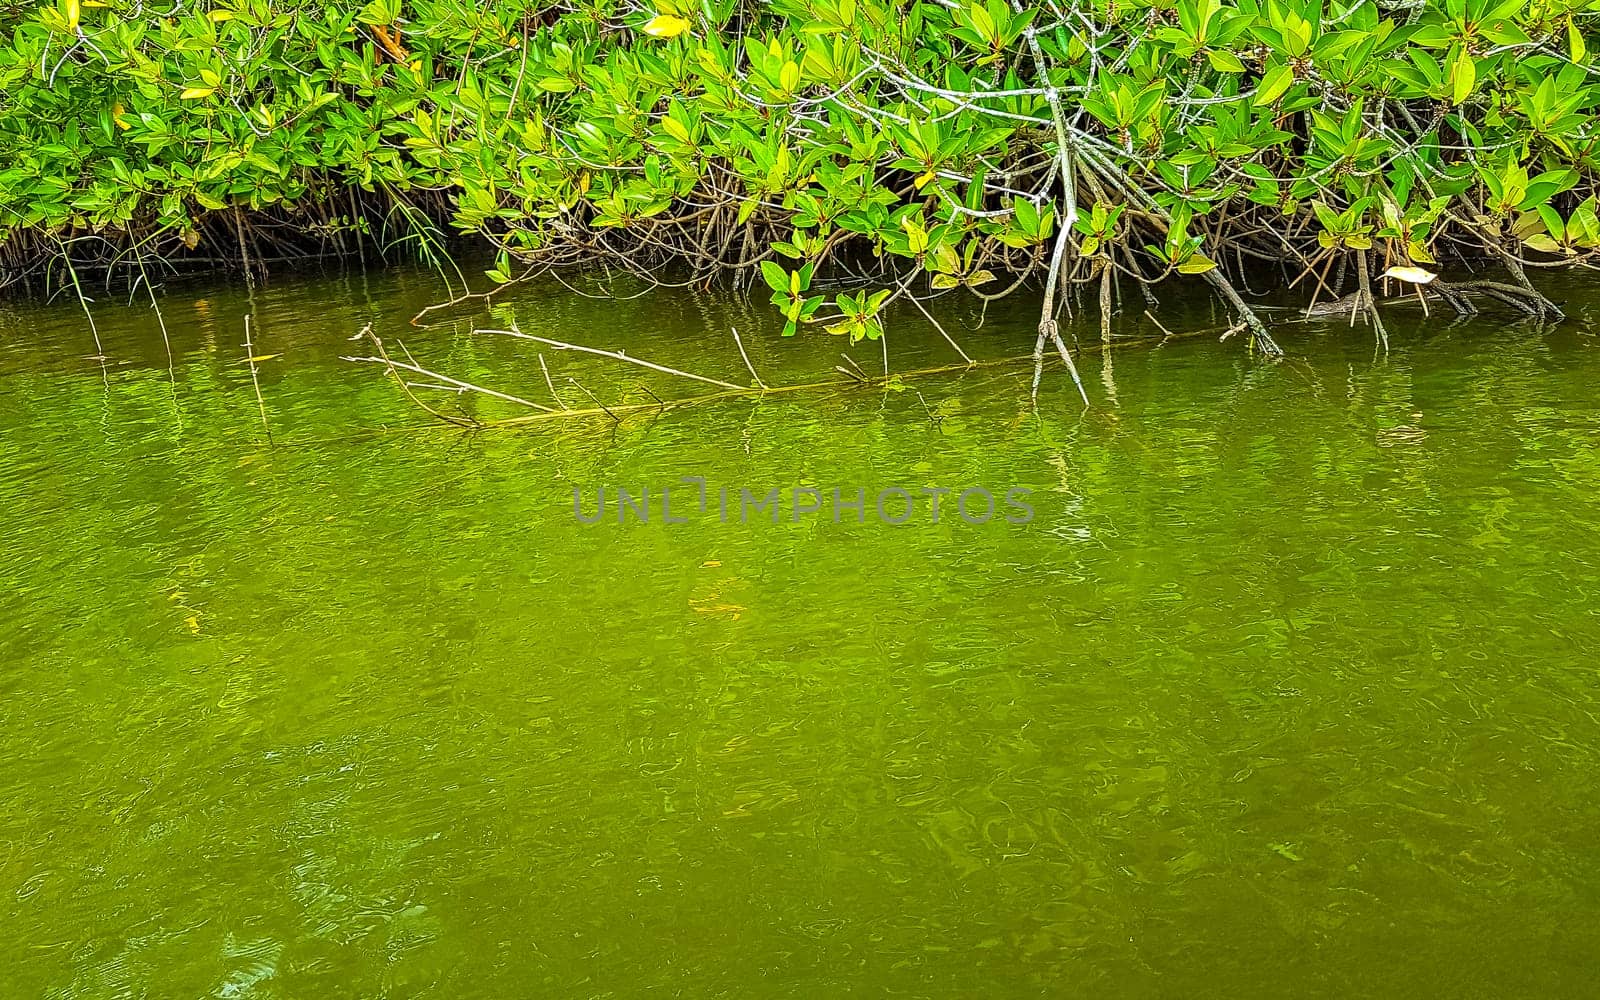 Boat safari through tropical natural mangrove jungle forest in Bentota Ganga River Lake in Bentota Beach Galle District Southern Province Sri Lanka.